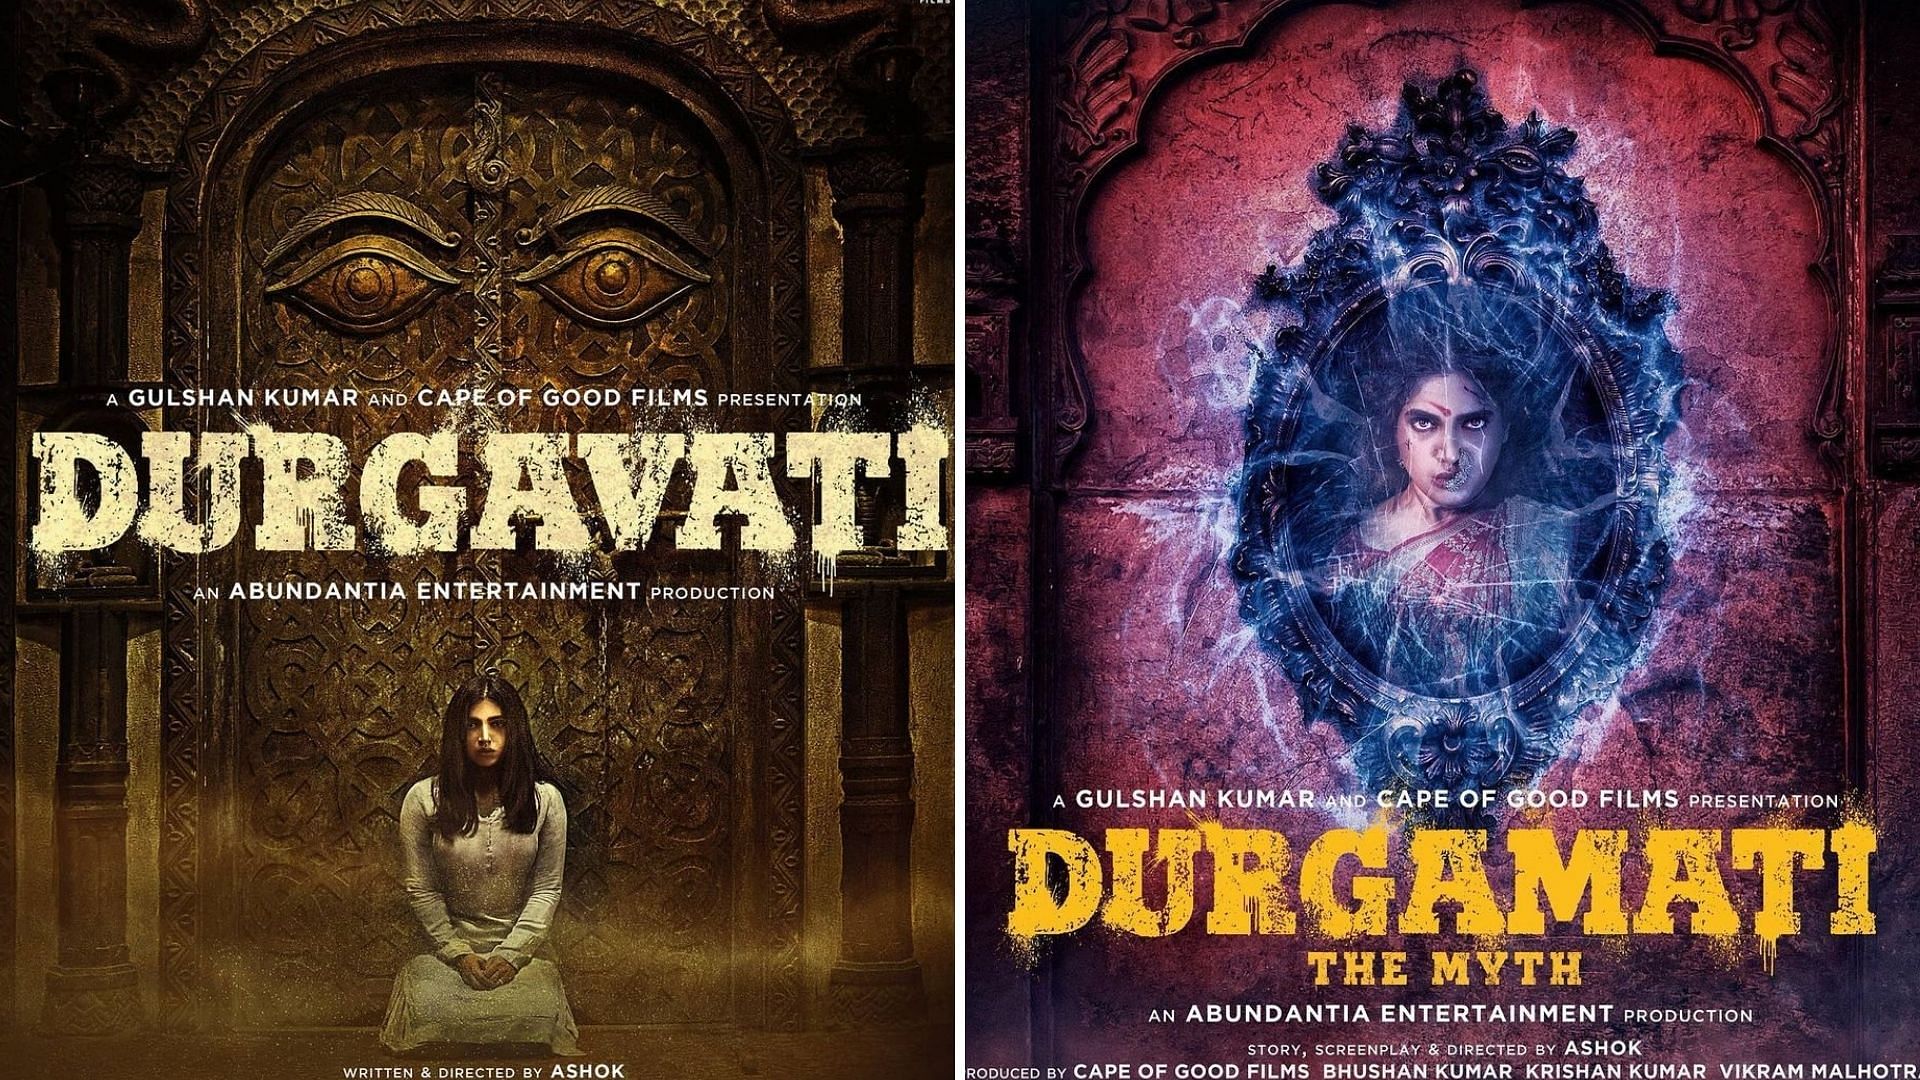 Bhumi Pednekar shares a new poster of Durgamati The Myth.